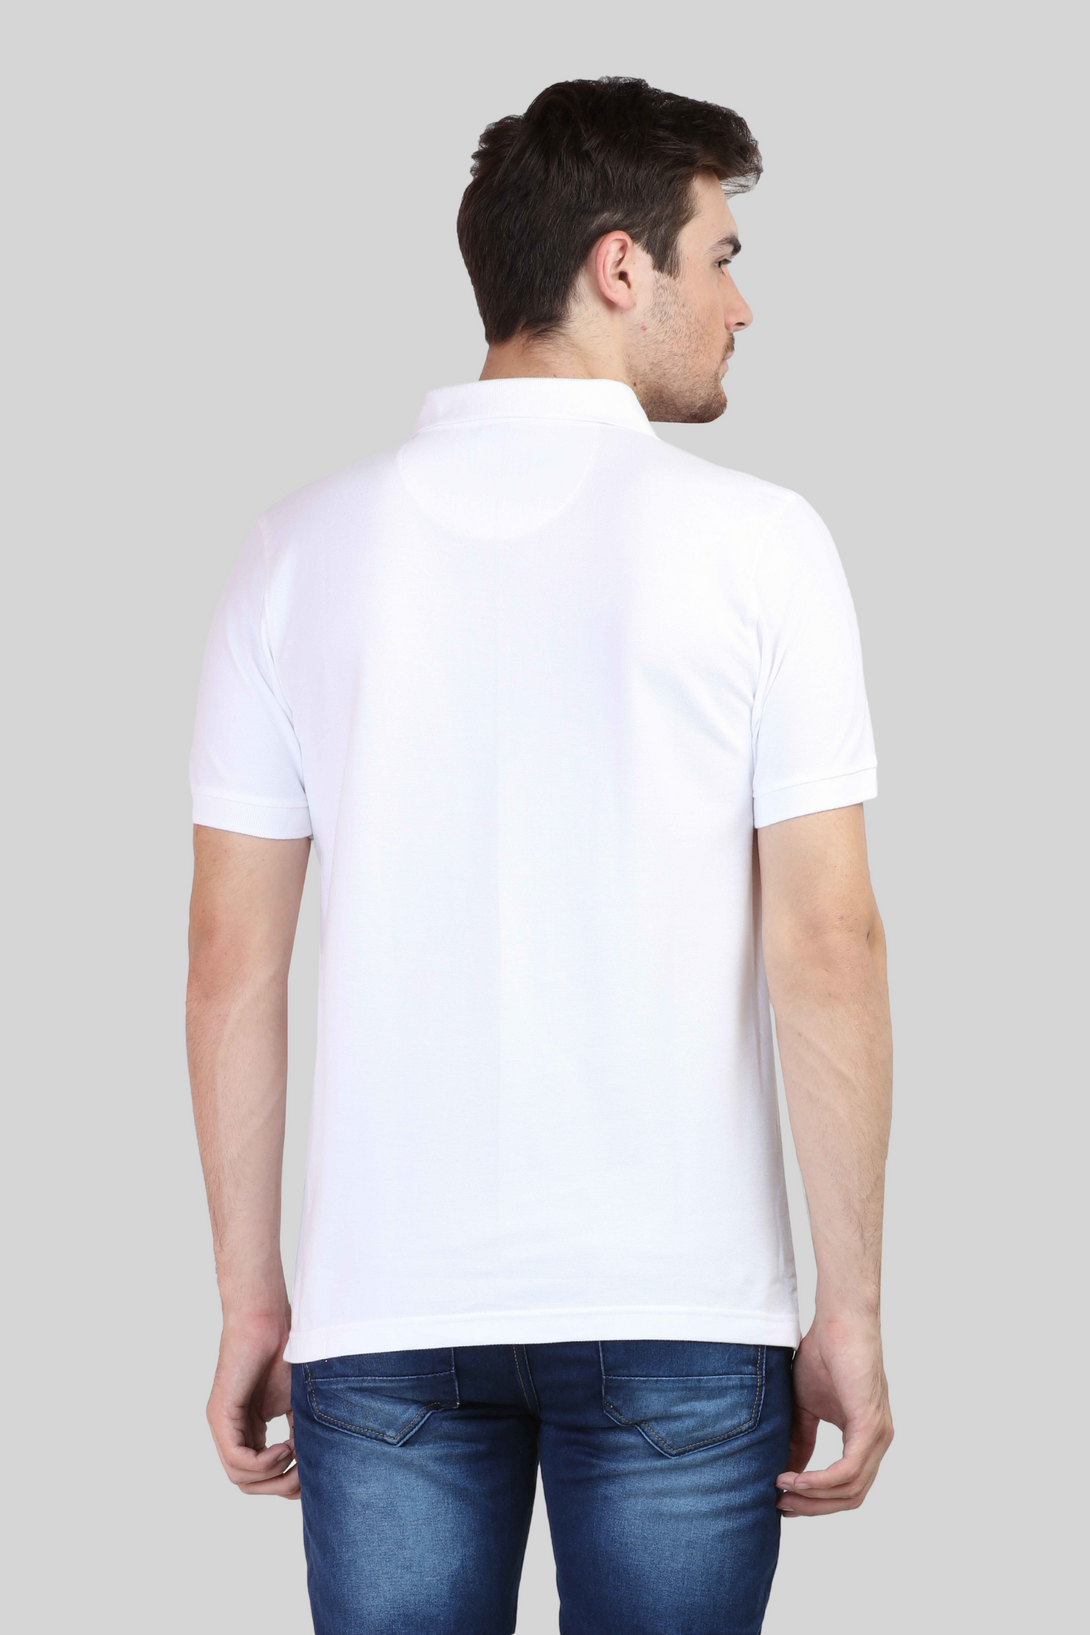 White Polo T-Shirt For Men - WowWaves - 8